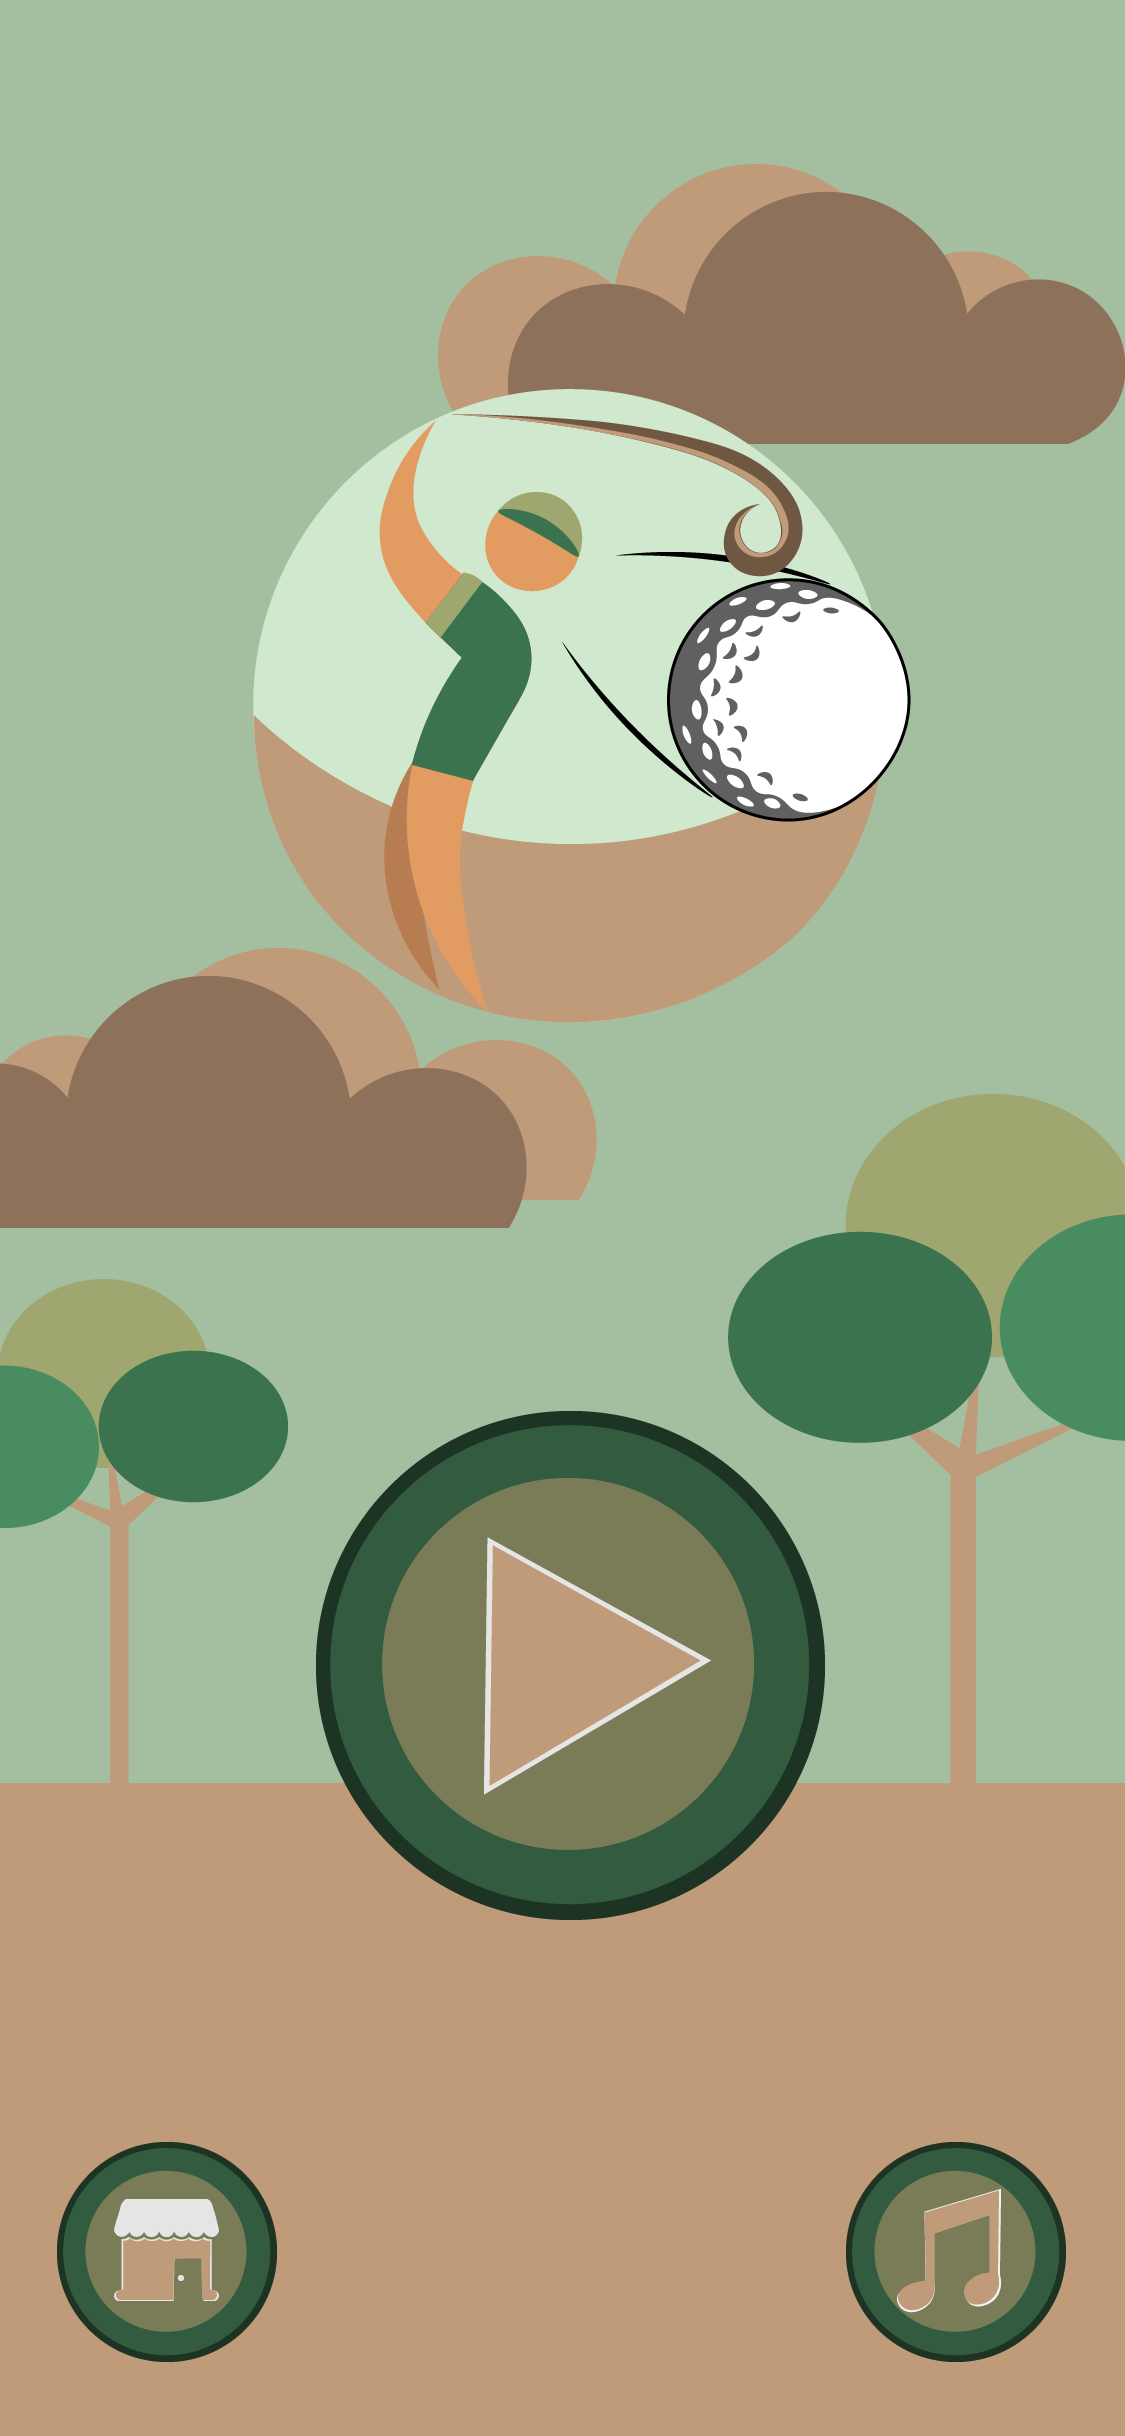 Mini-Golf Mobile Game User Interface